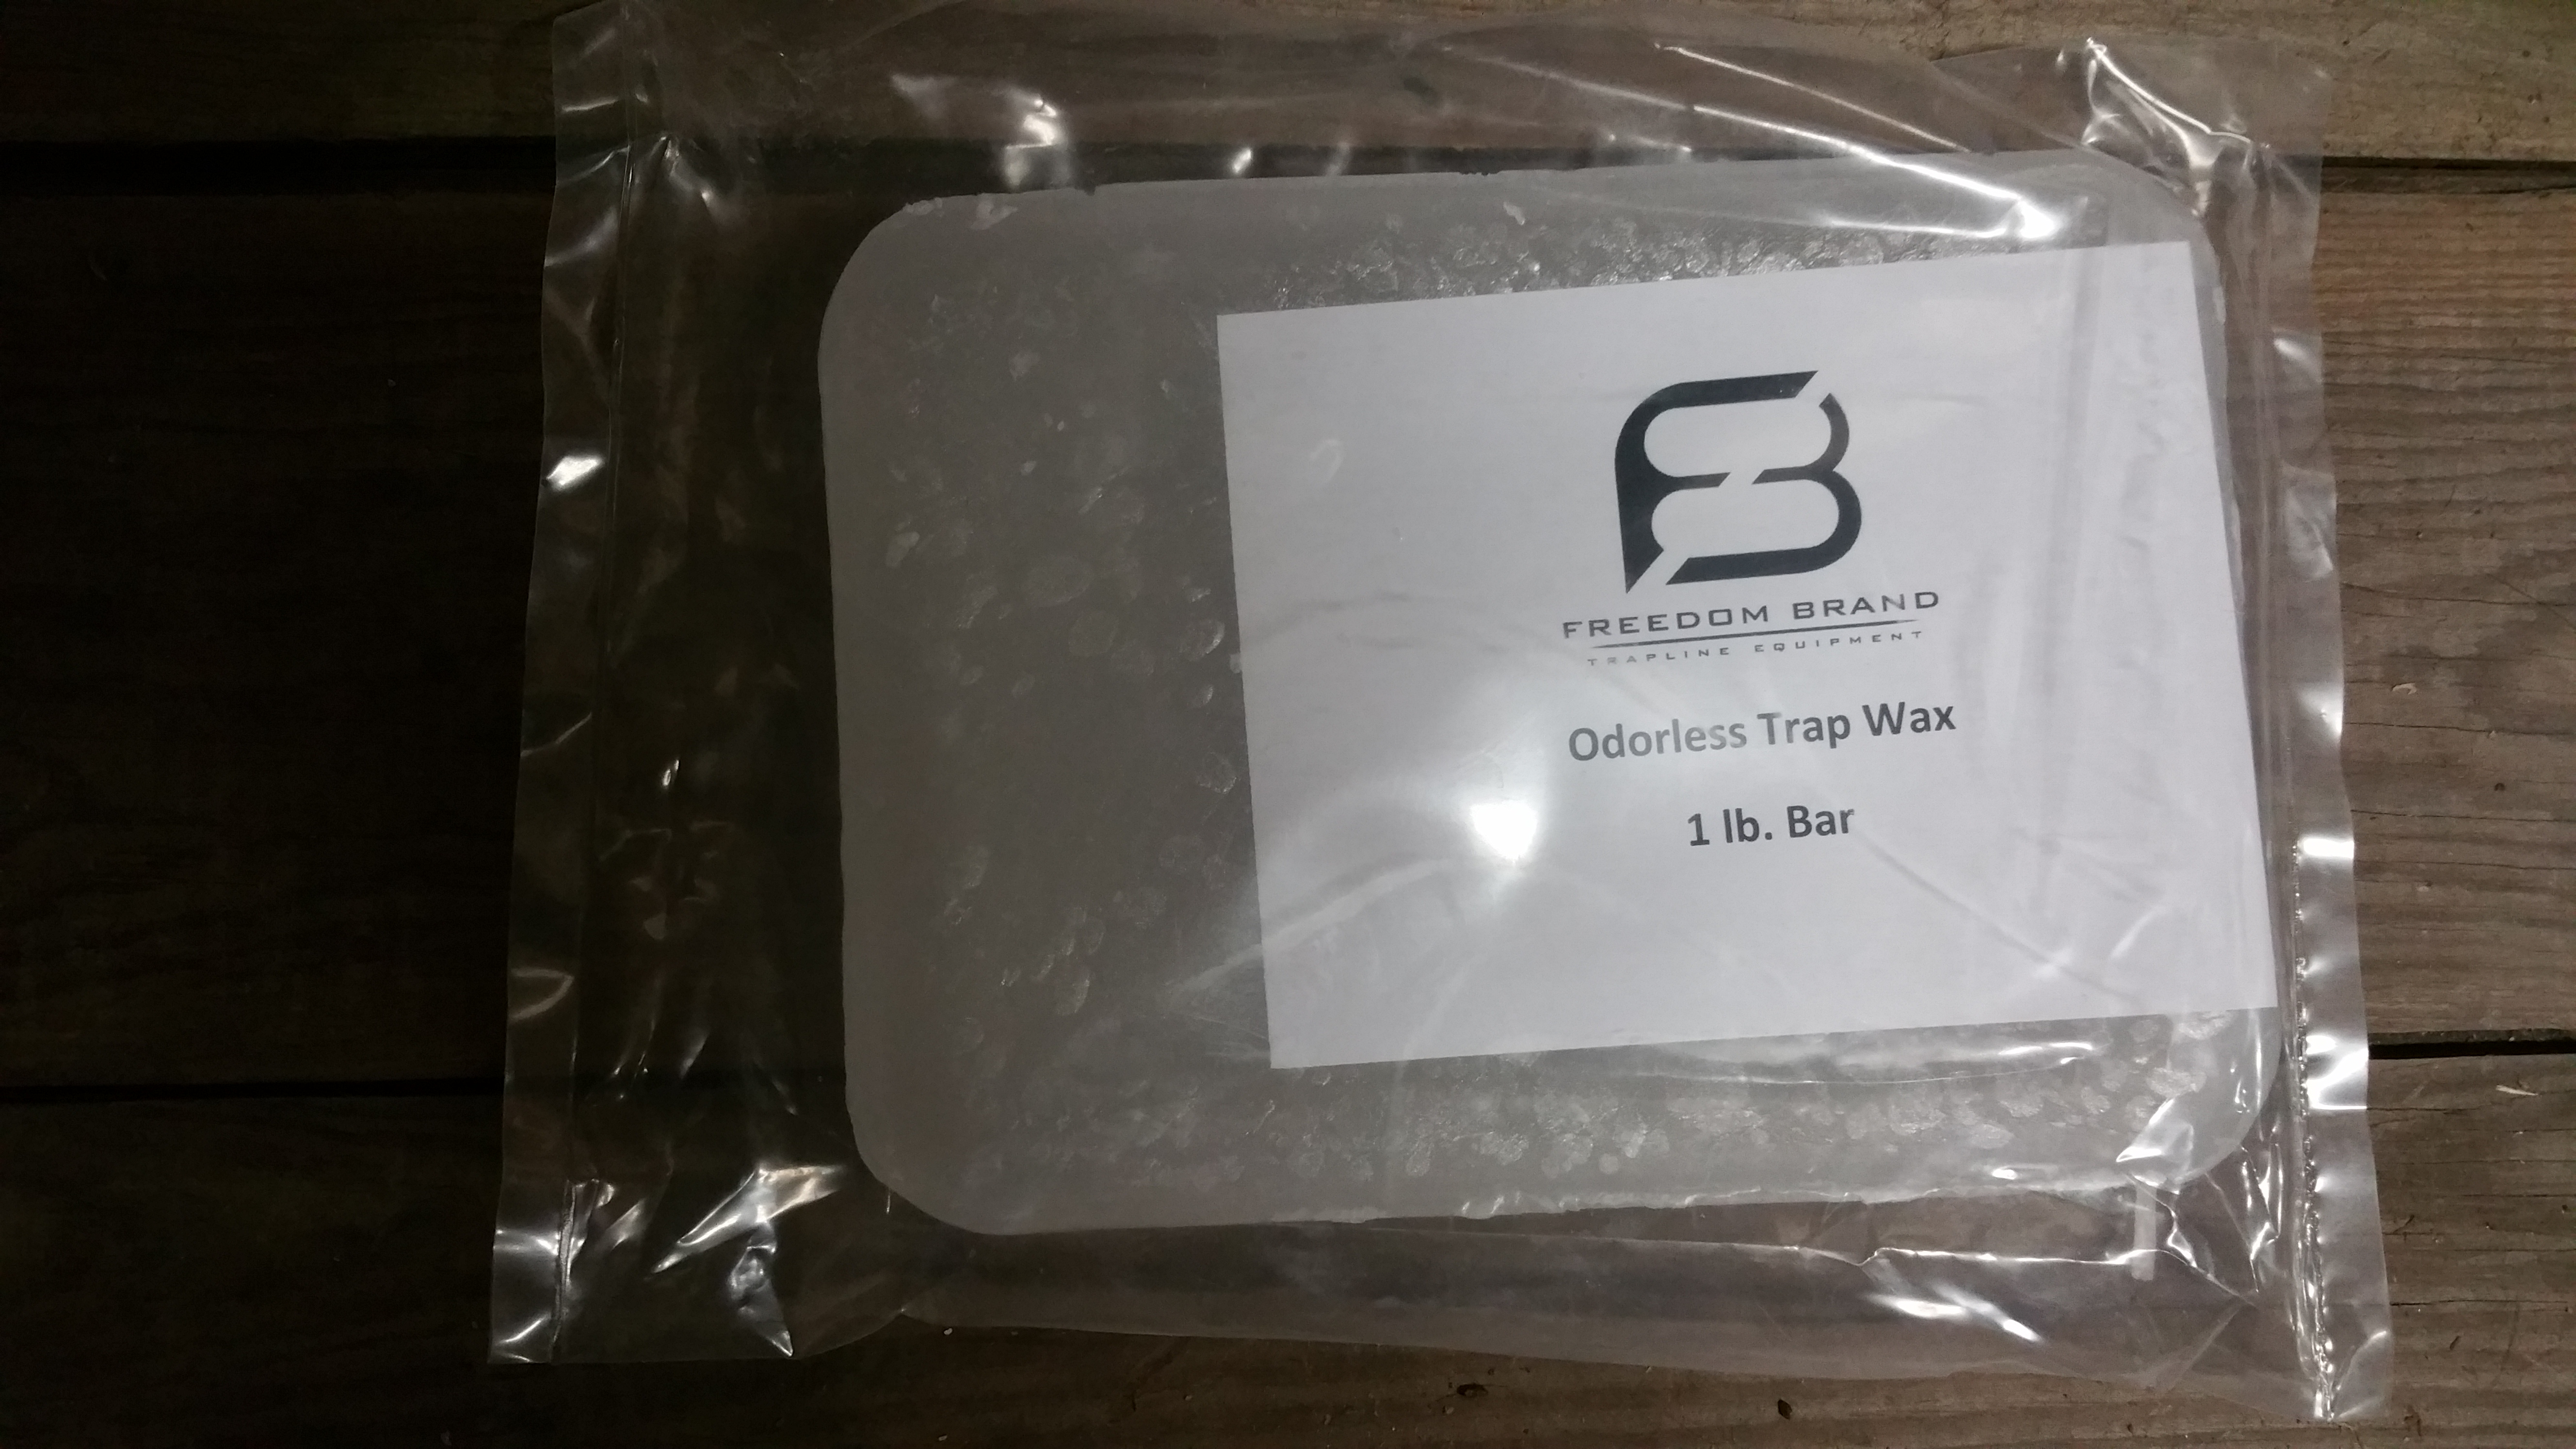 White Odorless Trap Wax